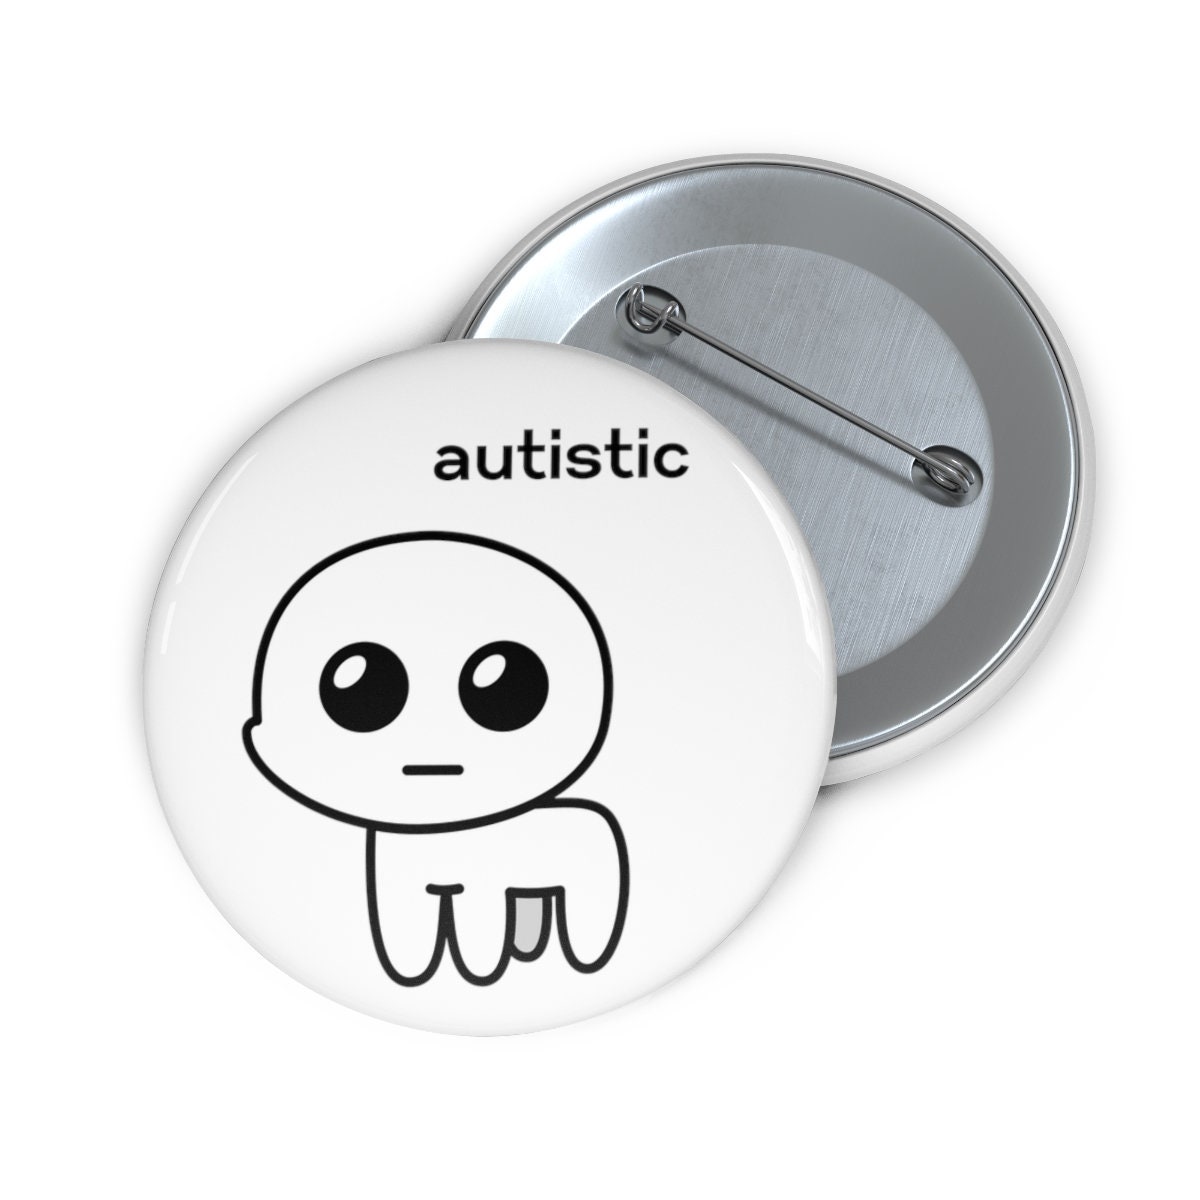 To be honest Tbh creature meme badge enamel pin Autism autistic